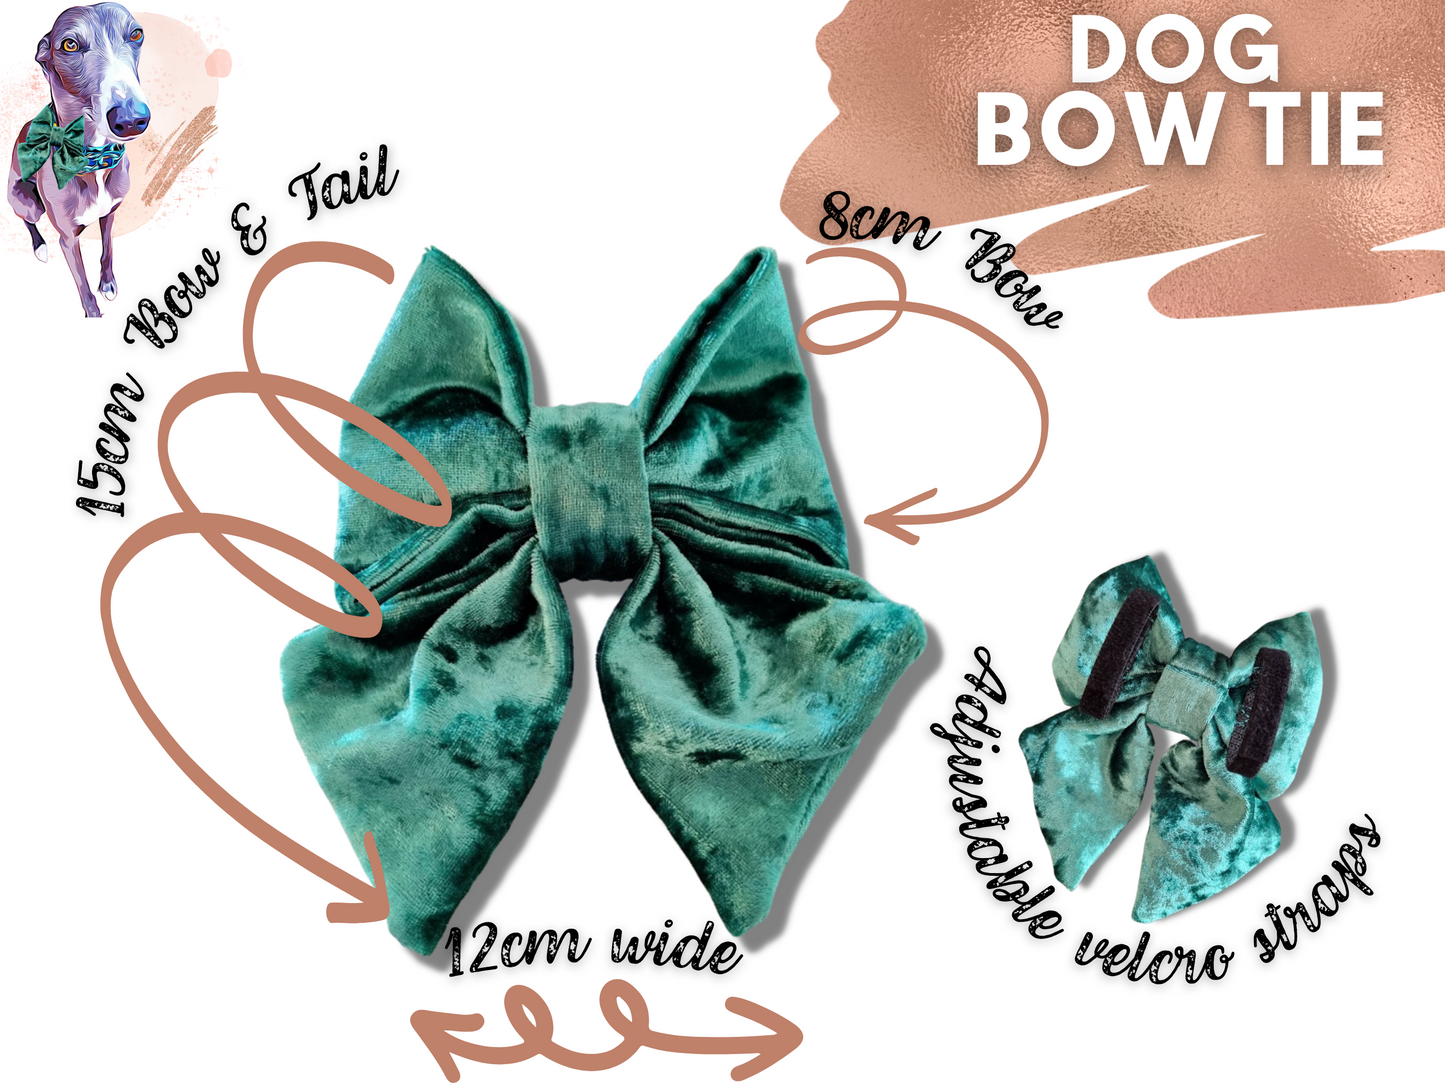 Black Christmas Holly dog bow tie